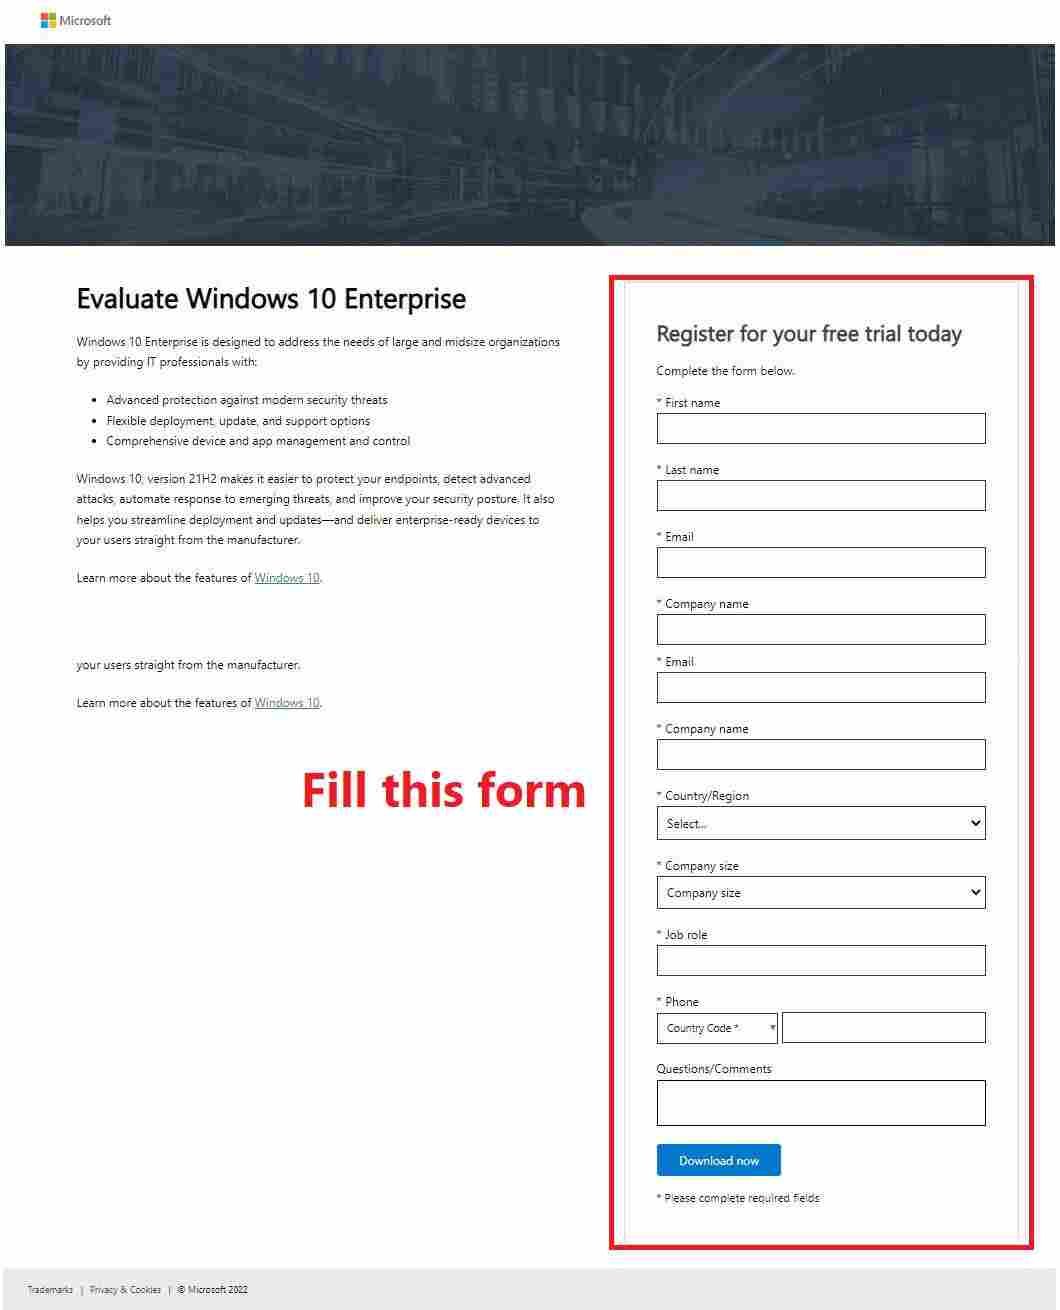 Evaluate Windows 10 Enterprise Microsoft official page